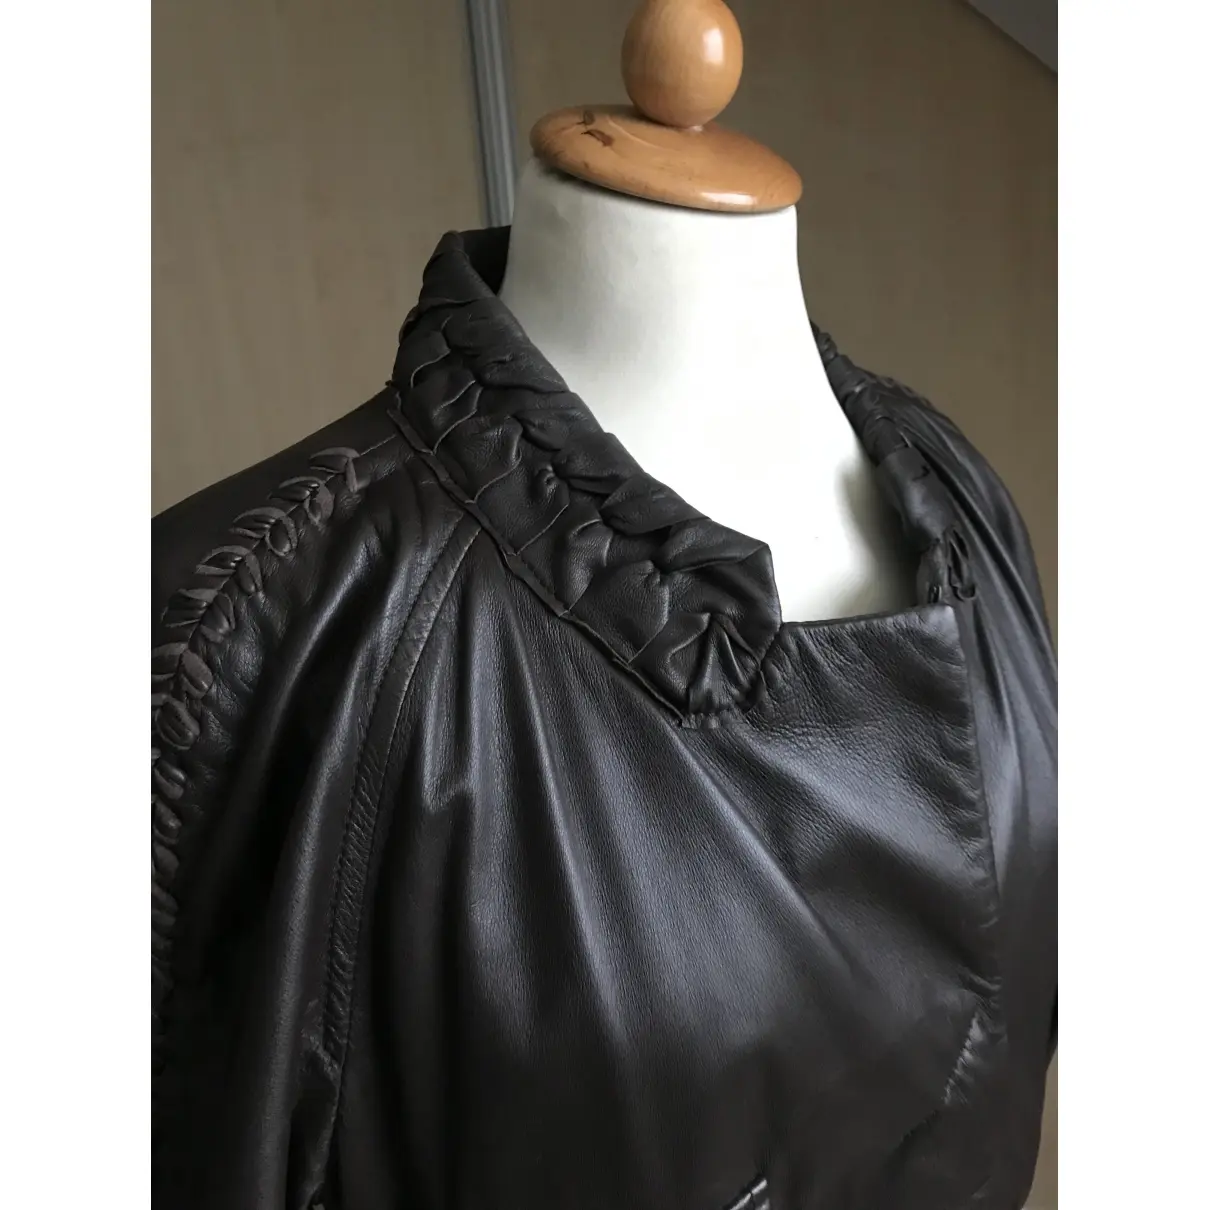 Leather dress Ermanno Scervino